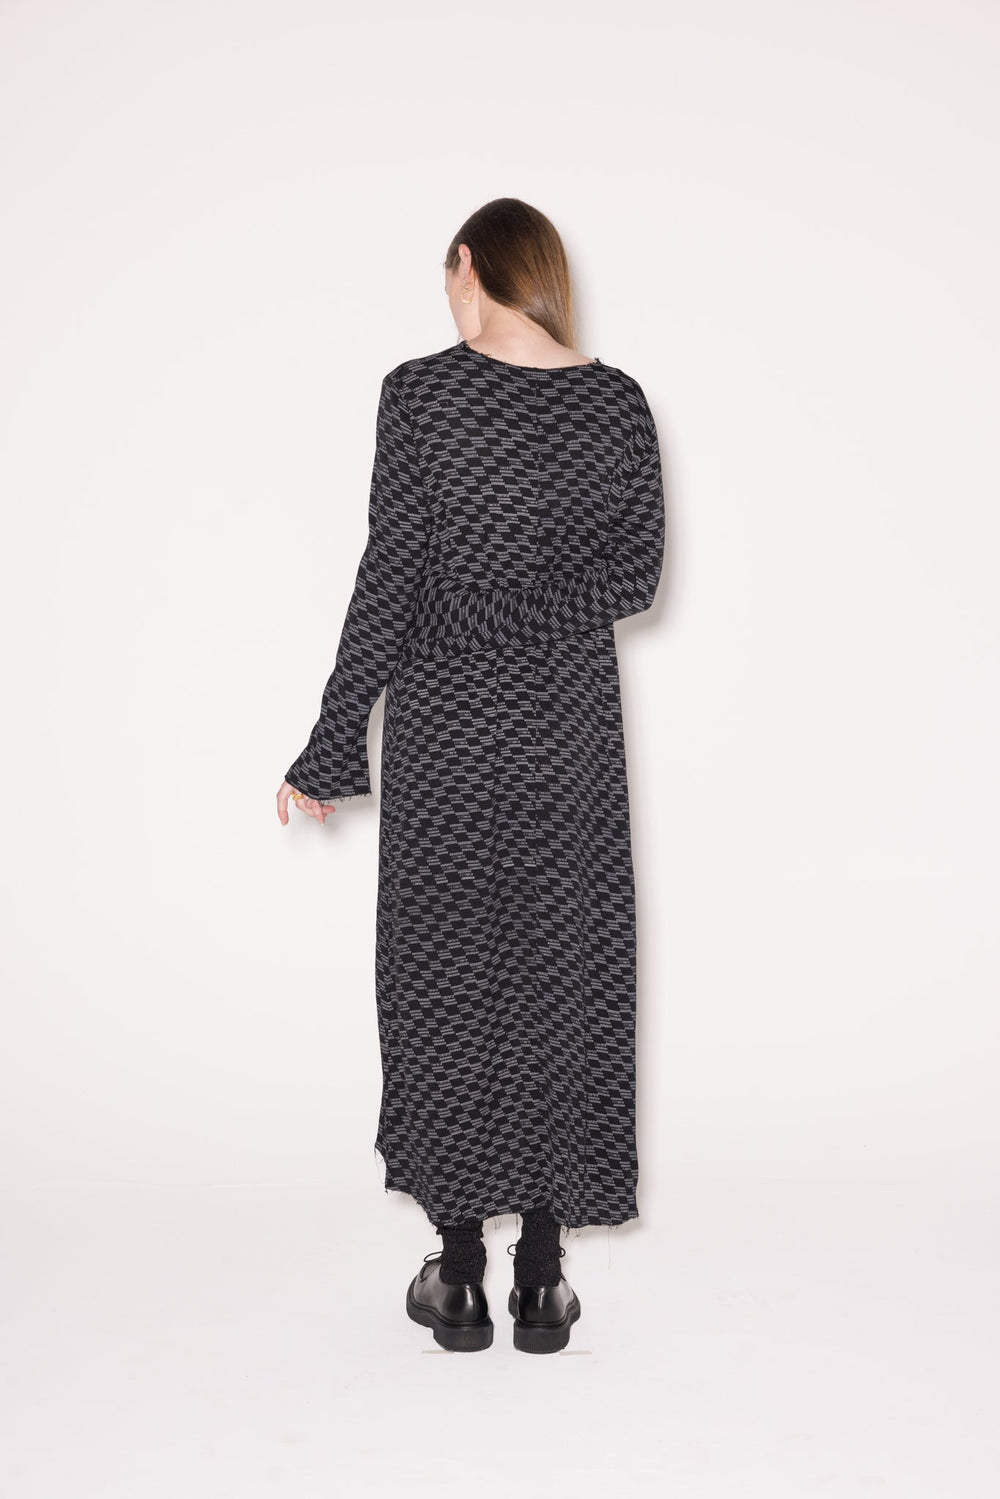 Yin Dress - Black/Grey Code - Chillis & More NZ